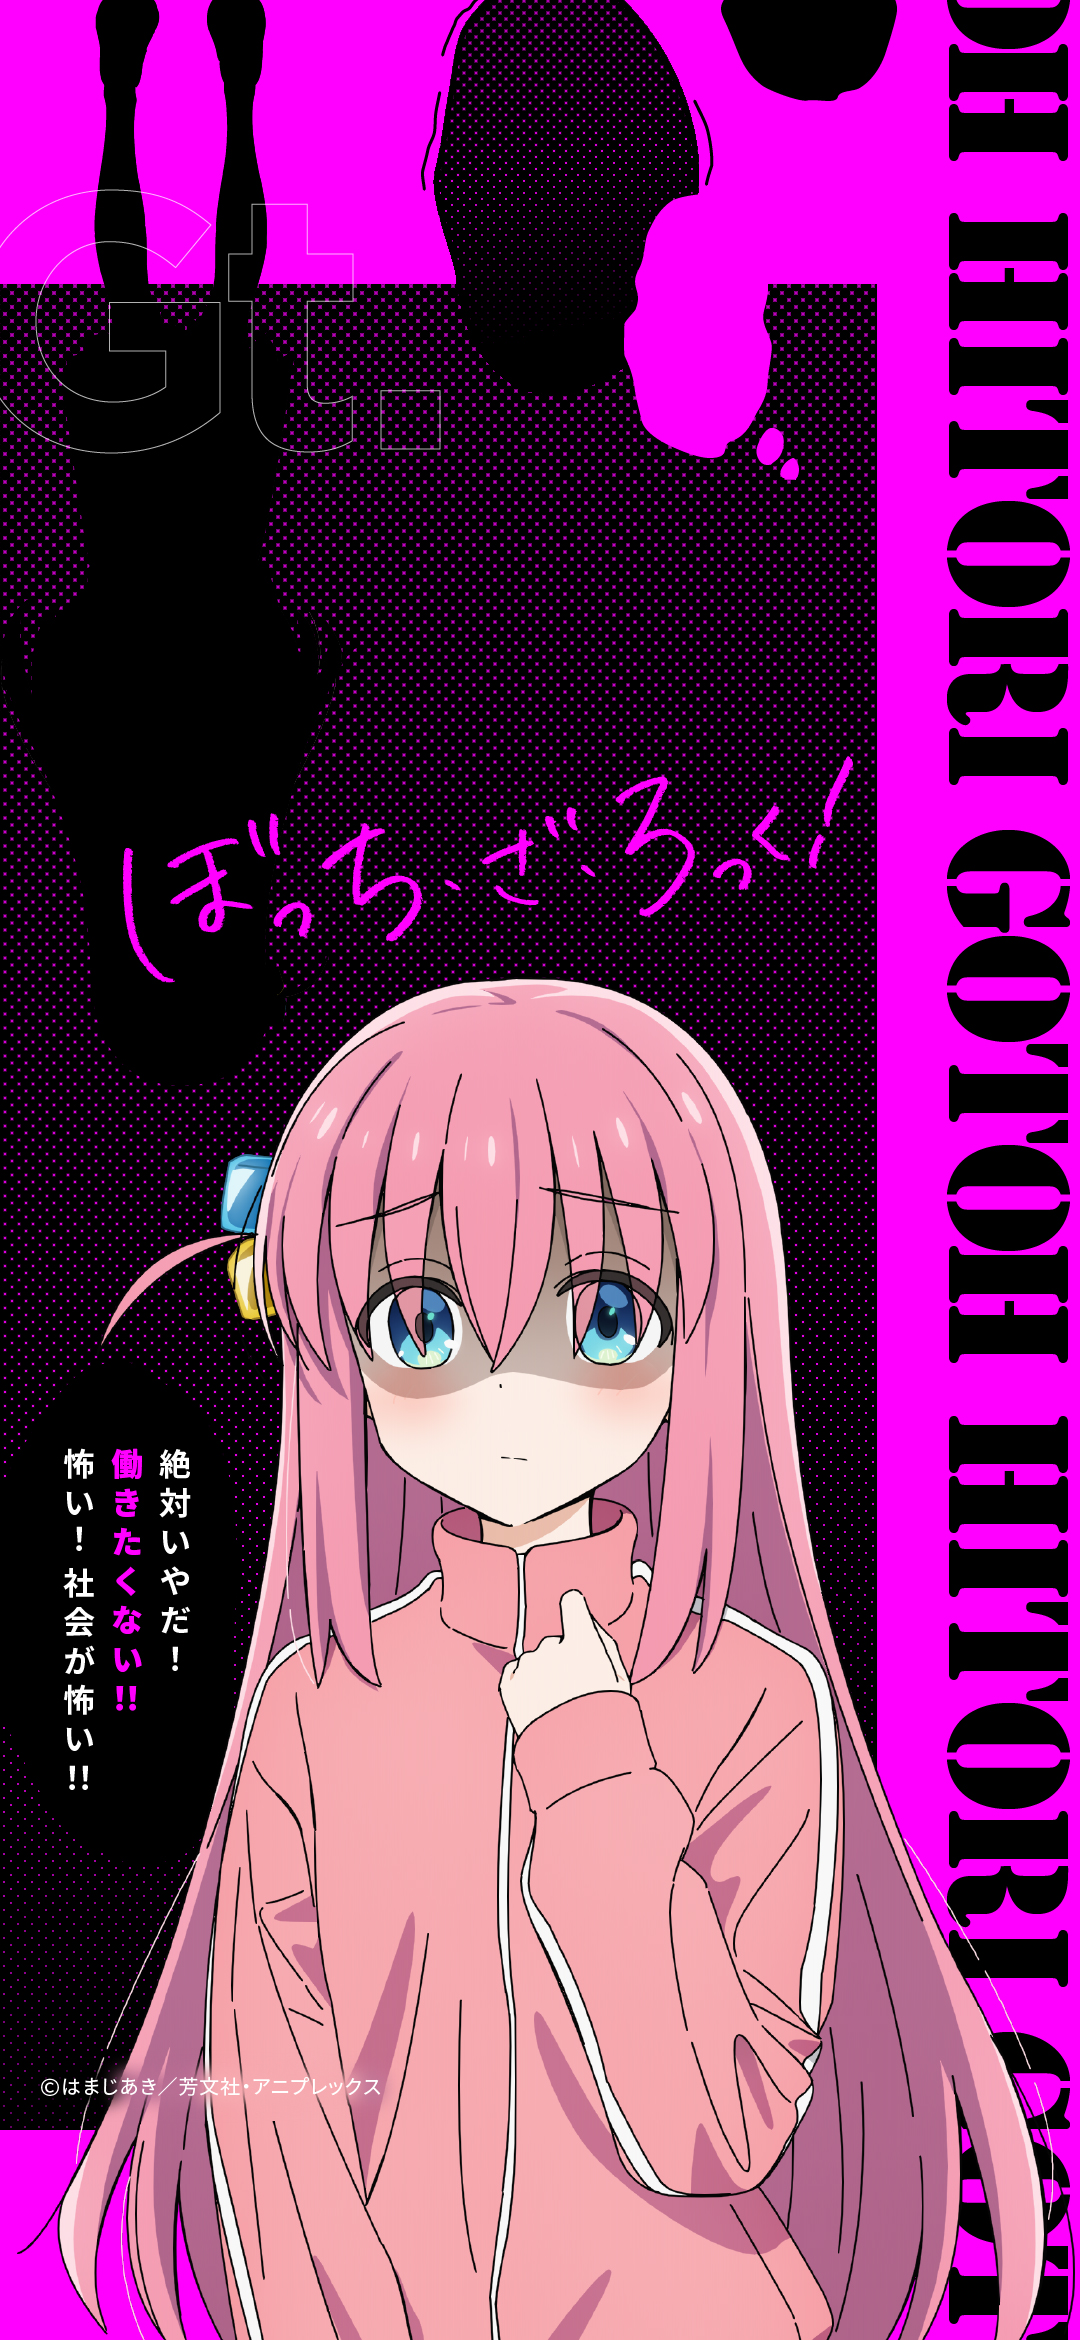 Gotou Hitori The Rock! Anime Image Board